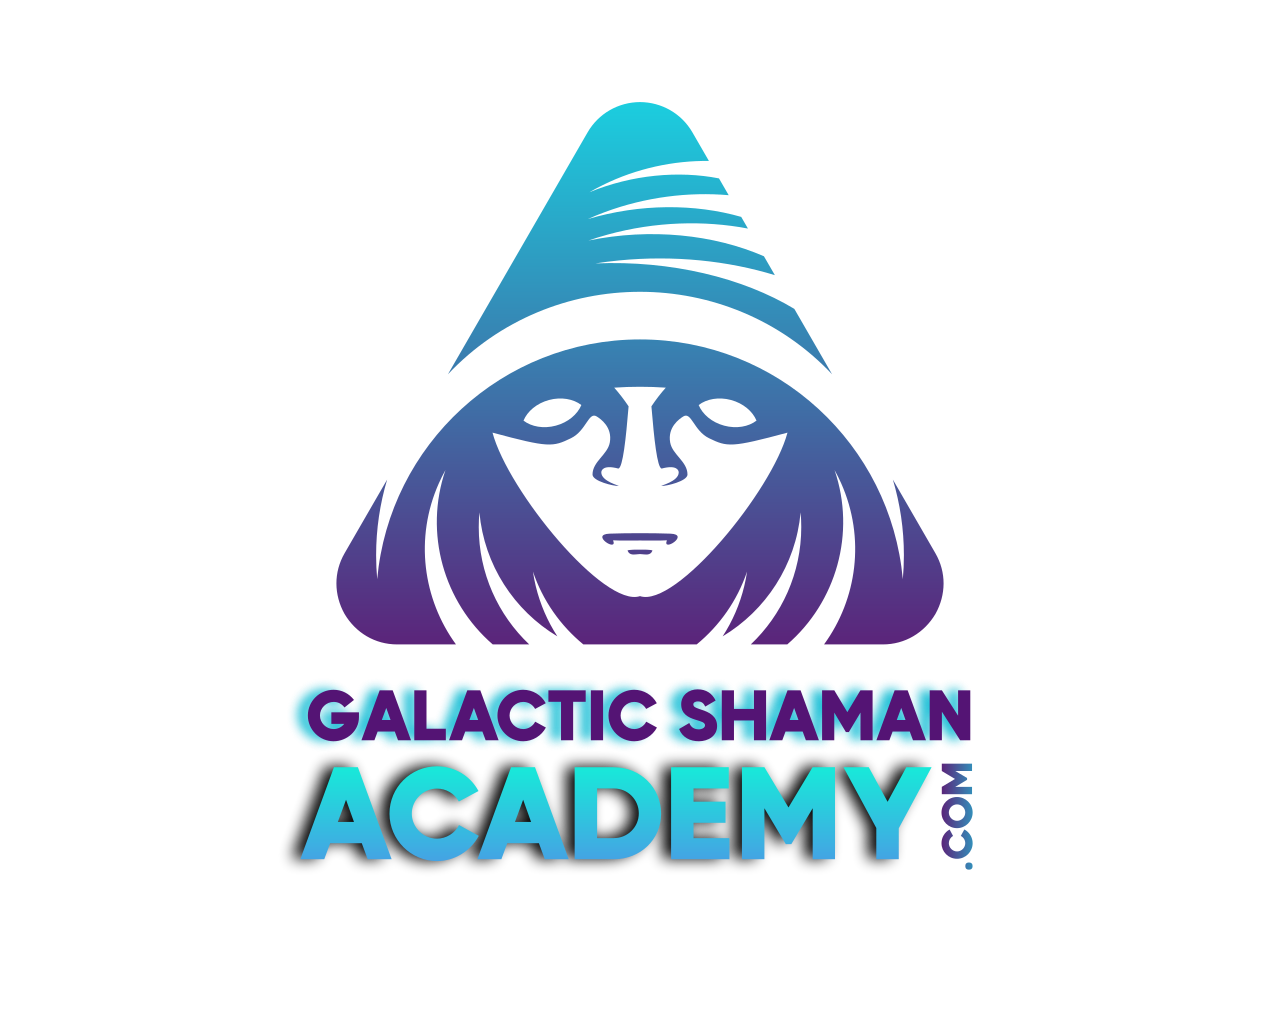 Galactic Shaman Academy's logo